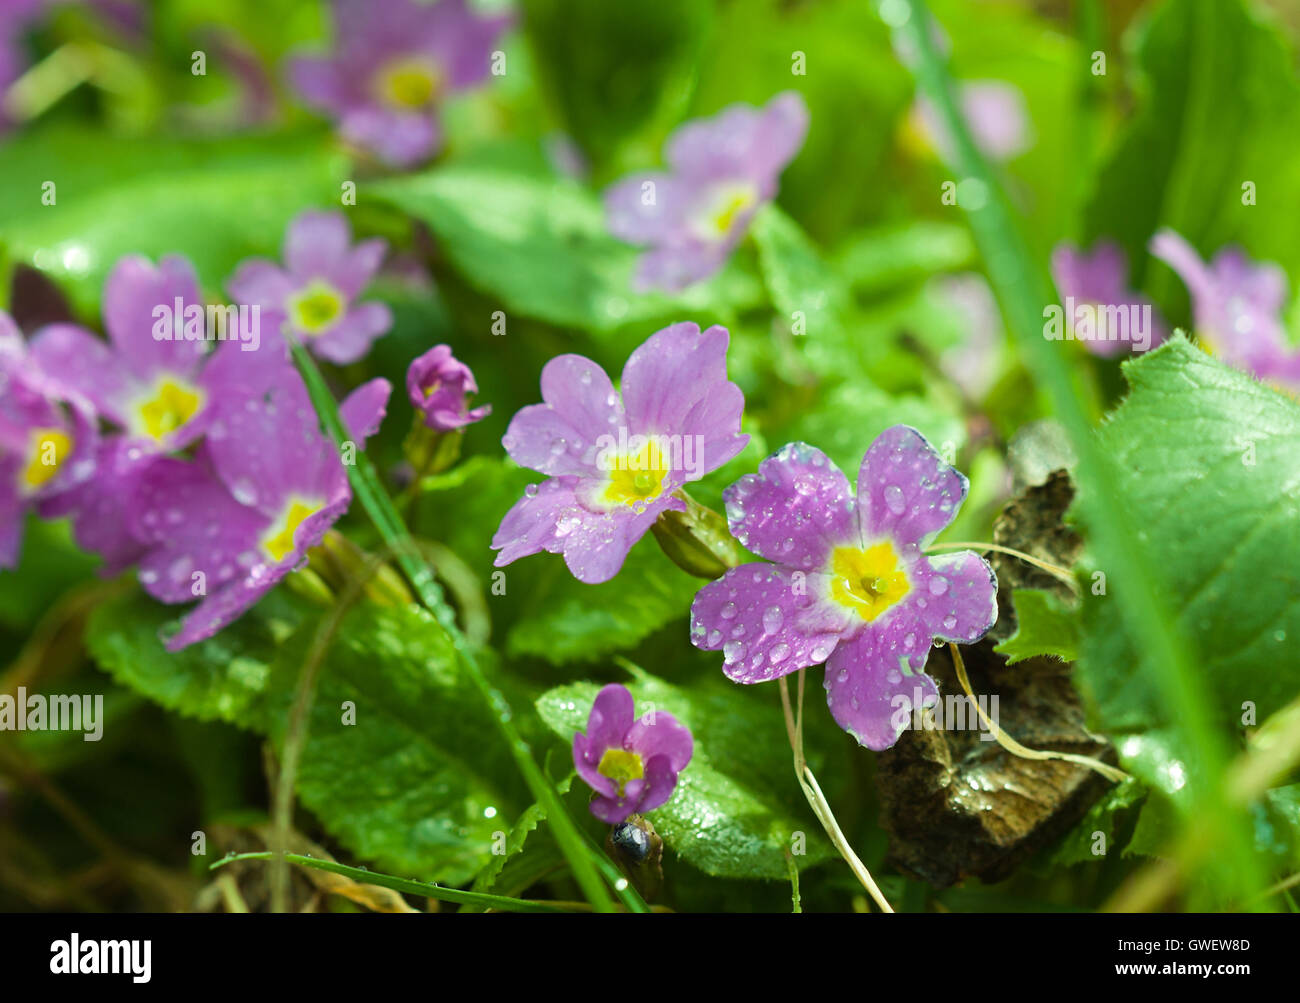 Botanic gardening plant nature image: primrose (primula, oxlip) flowers with water drops (dew) closeup Stock Photo